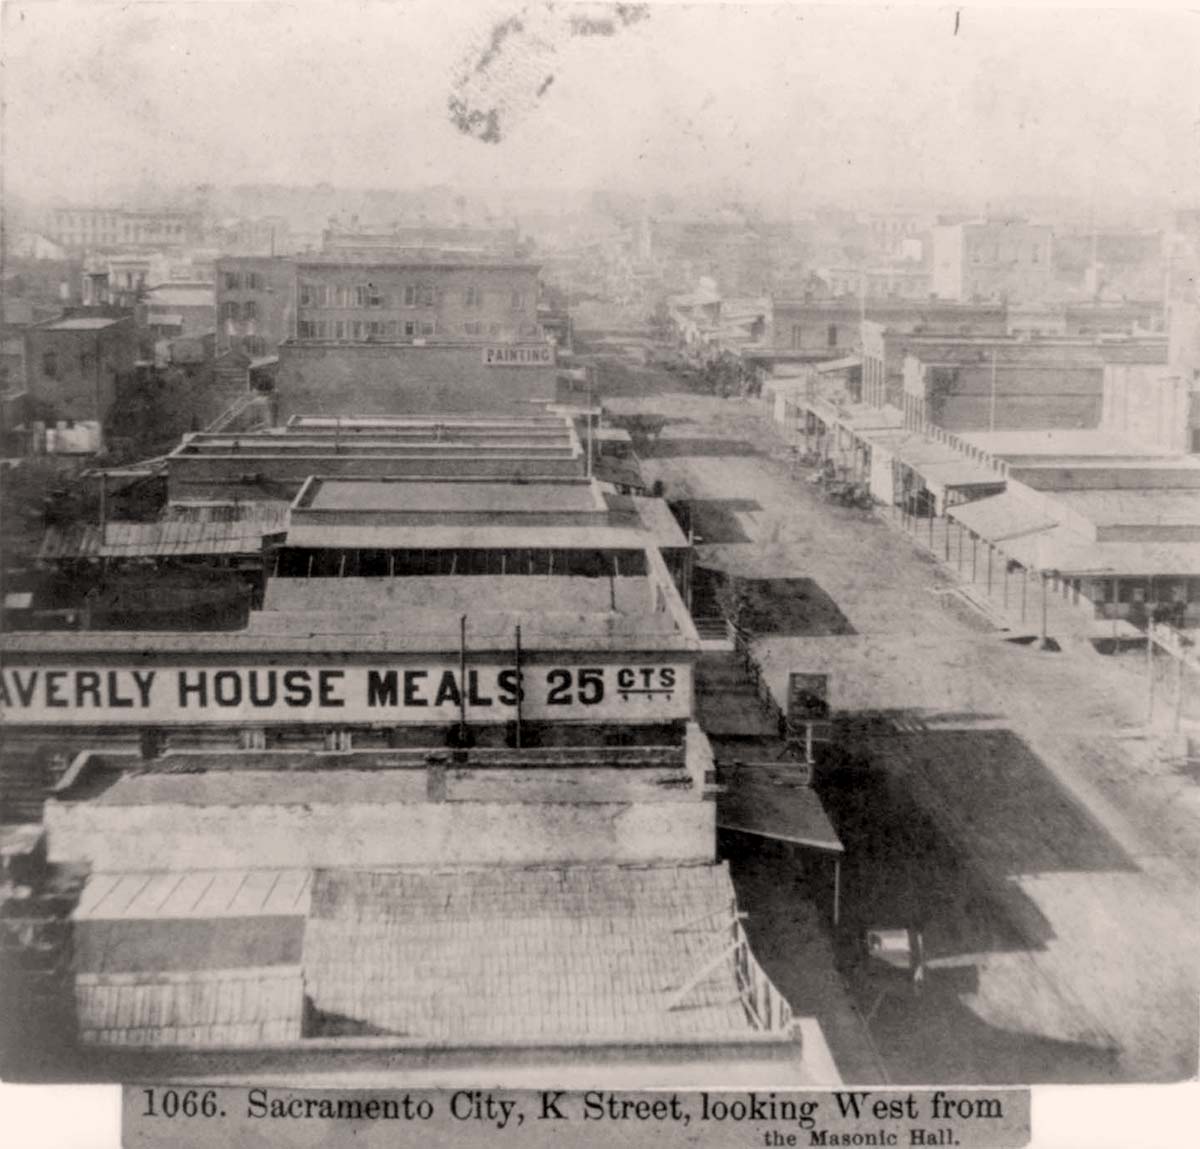 Sacramento, California. K Street, looking West from the Masonic Hall, 1866